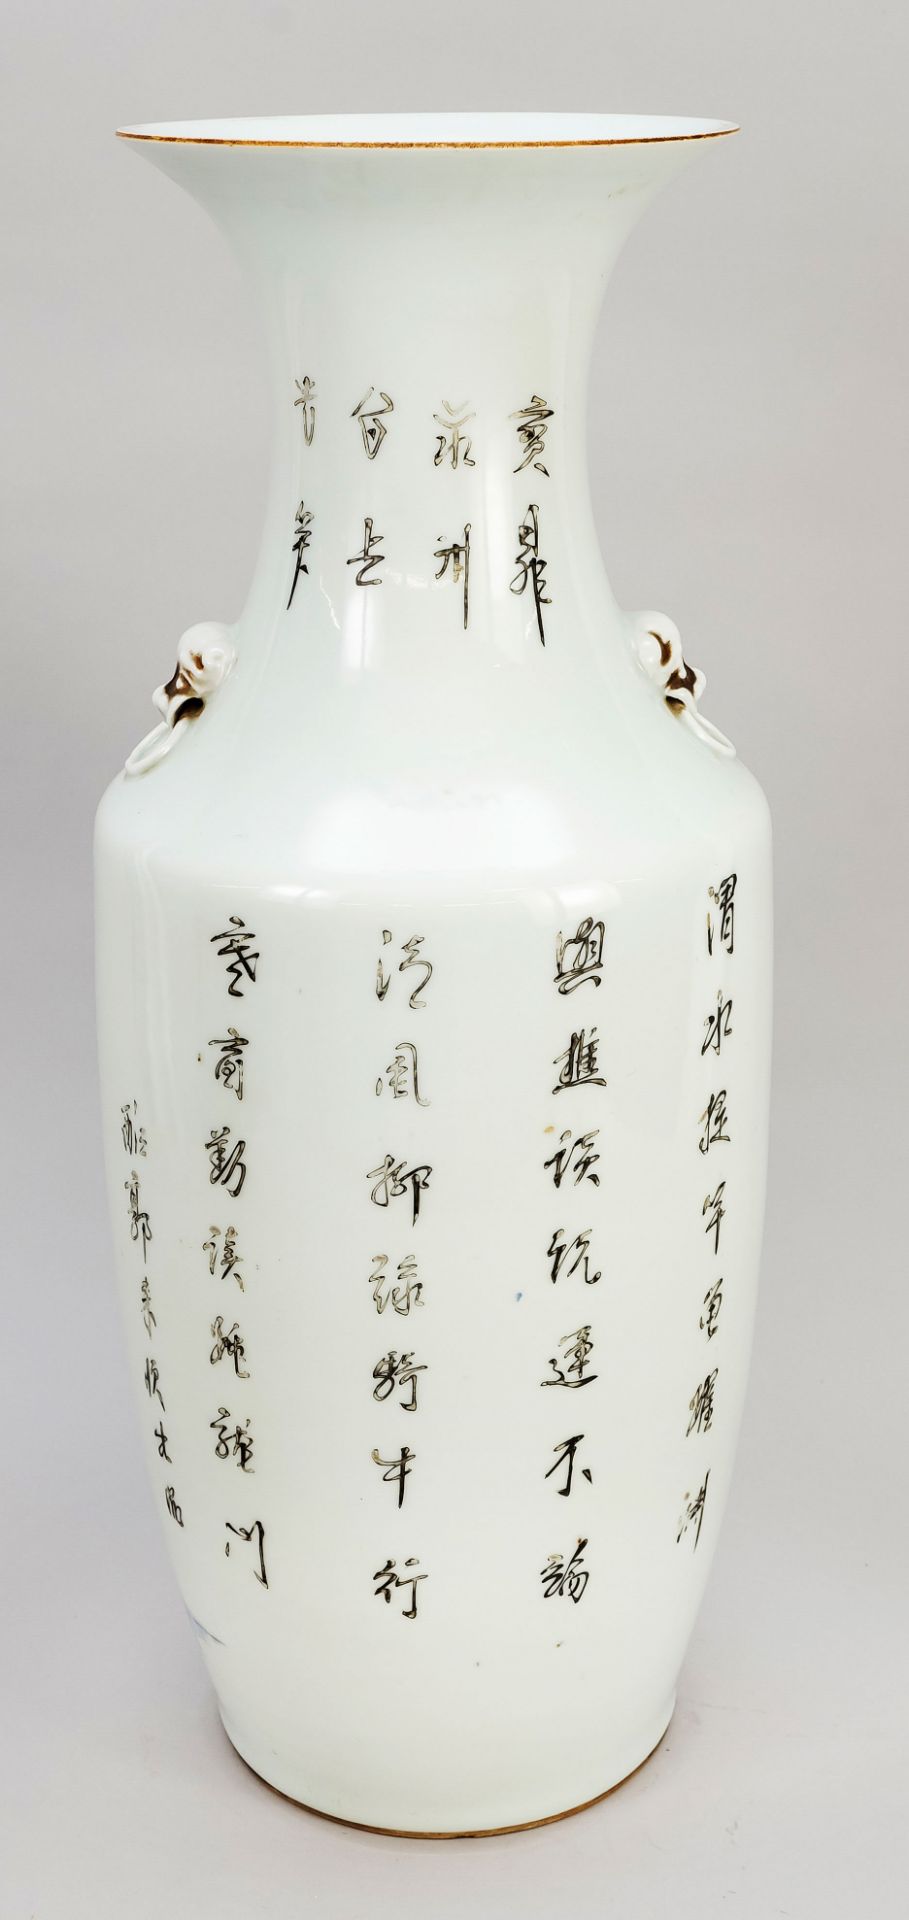 Large floor vase Republic, China, Republic period(1912-1949), porcelain with polychrome glaze - Image 2 of 2